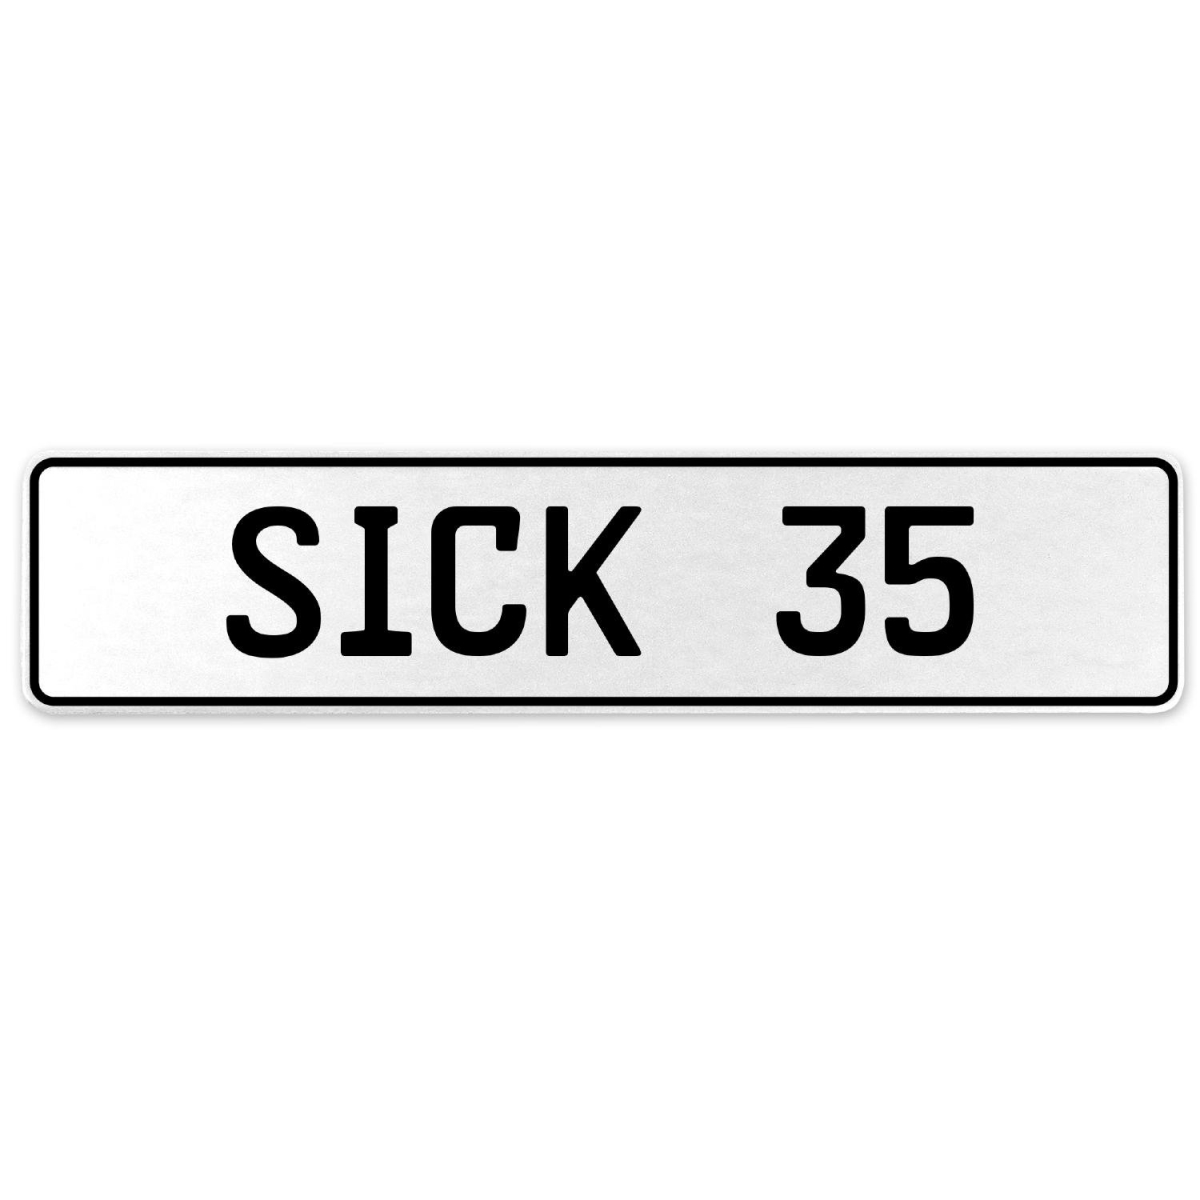 554335 Sick 35 - White Aluminum Street Sign Mancave Euro Plate Name Door Sign Wall